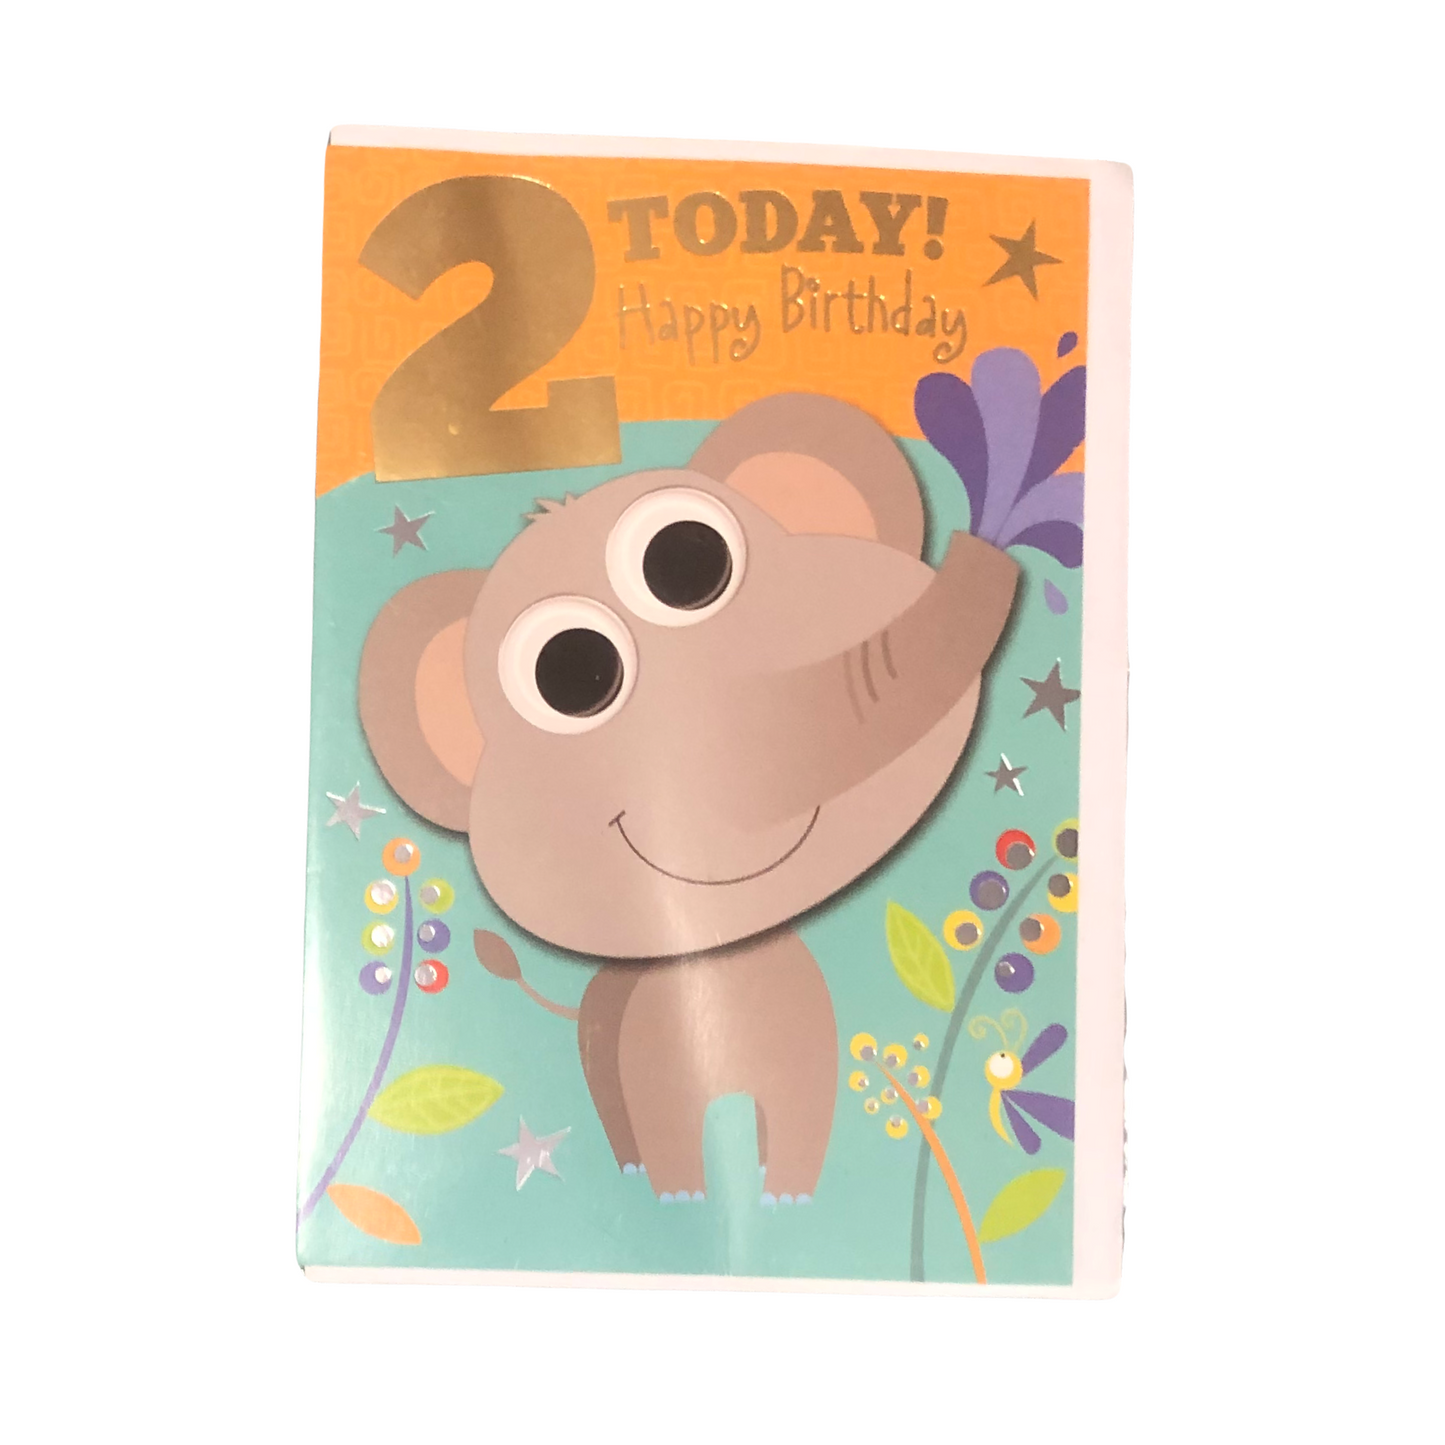 2 Today Birthday Card